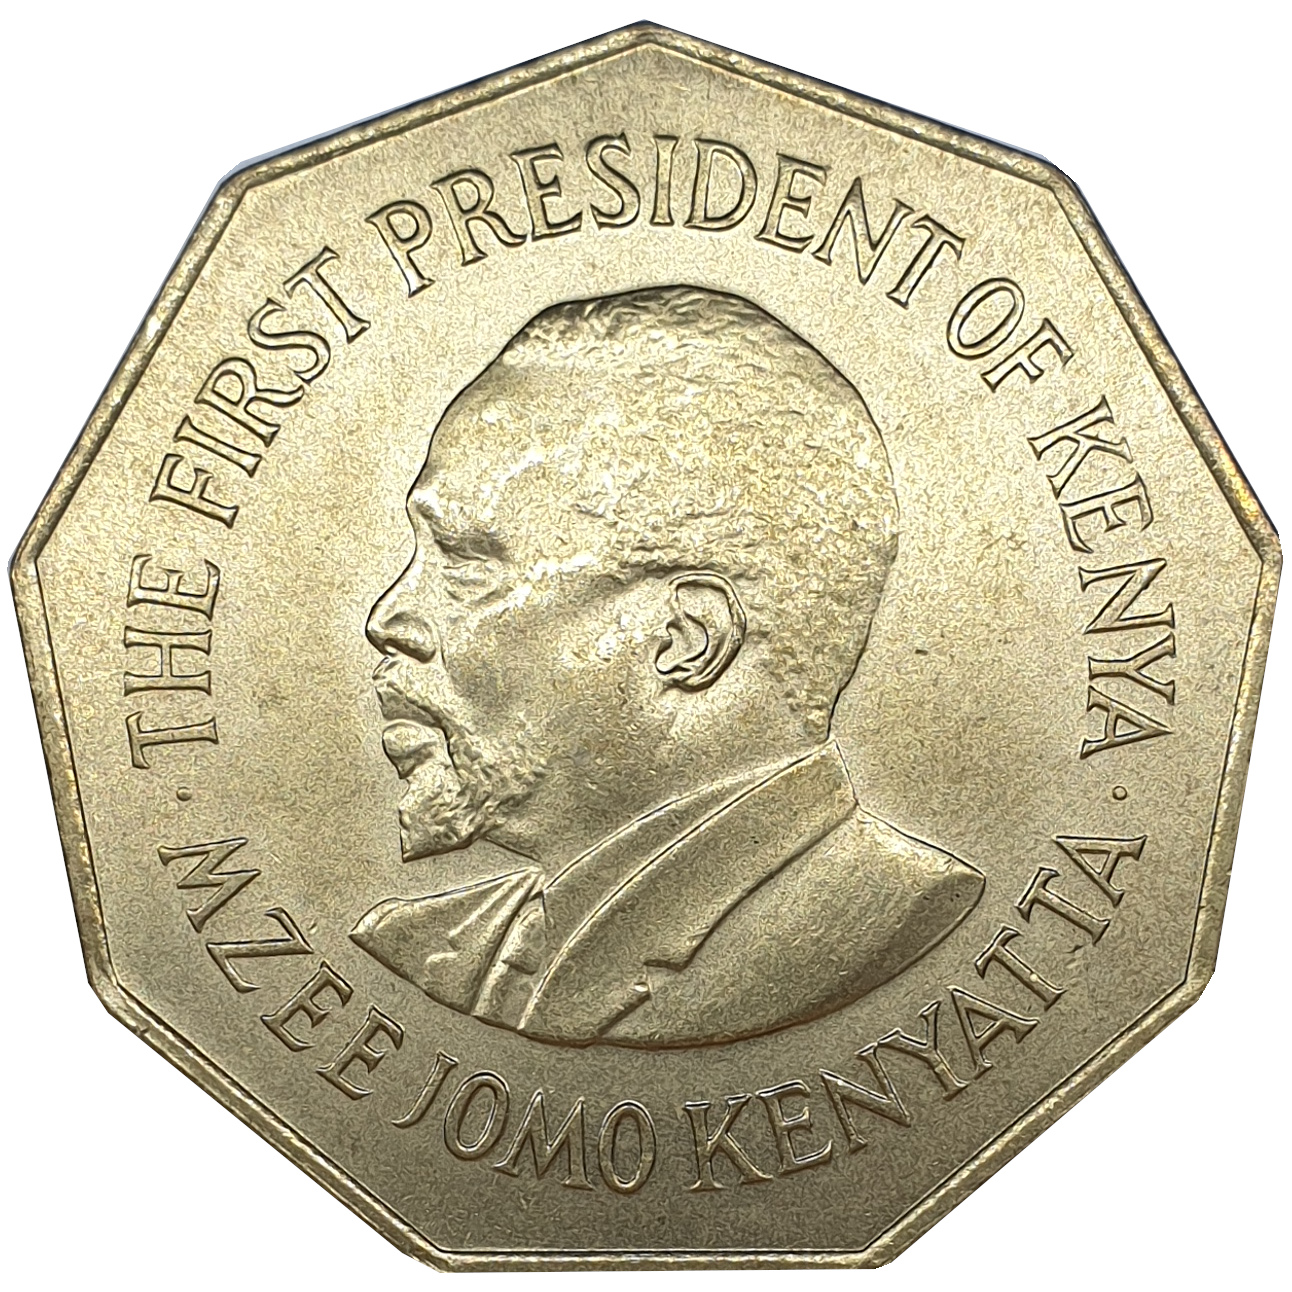 5 shillings - Mzee Jomo Kenyatta - With legend